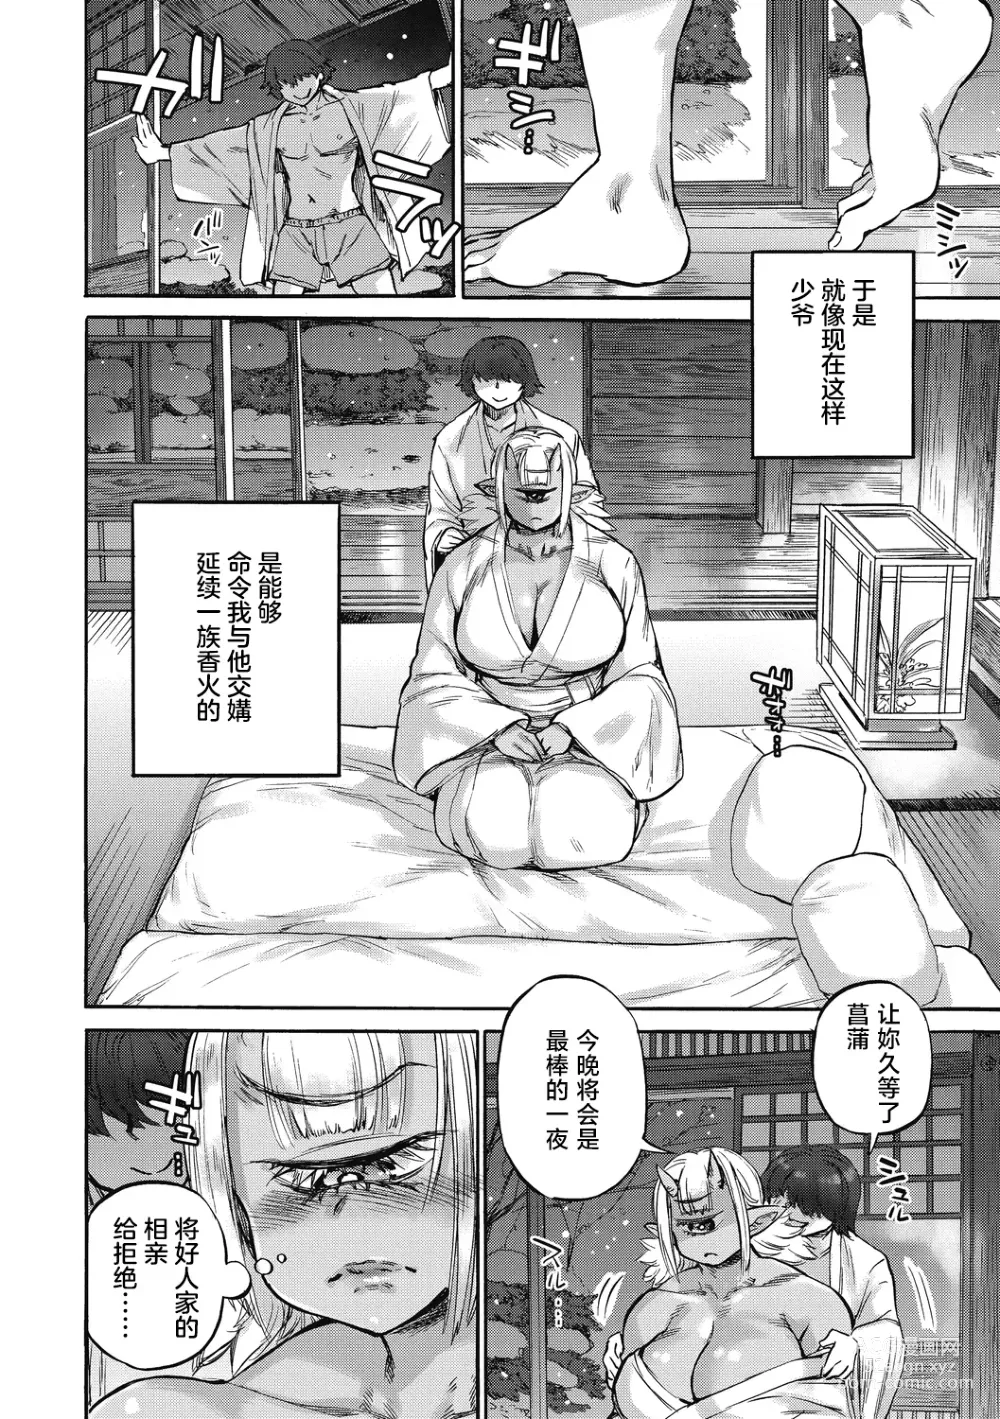 Page 12 of manga Ayame no Noroi